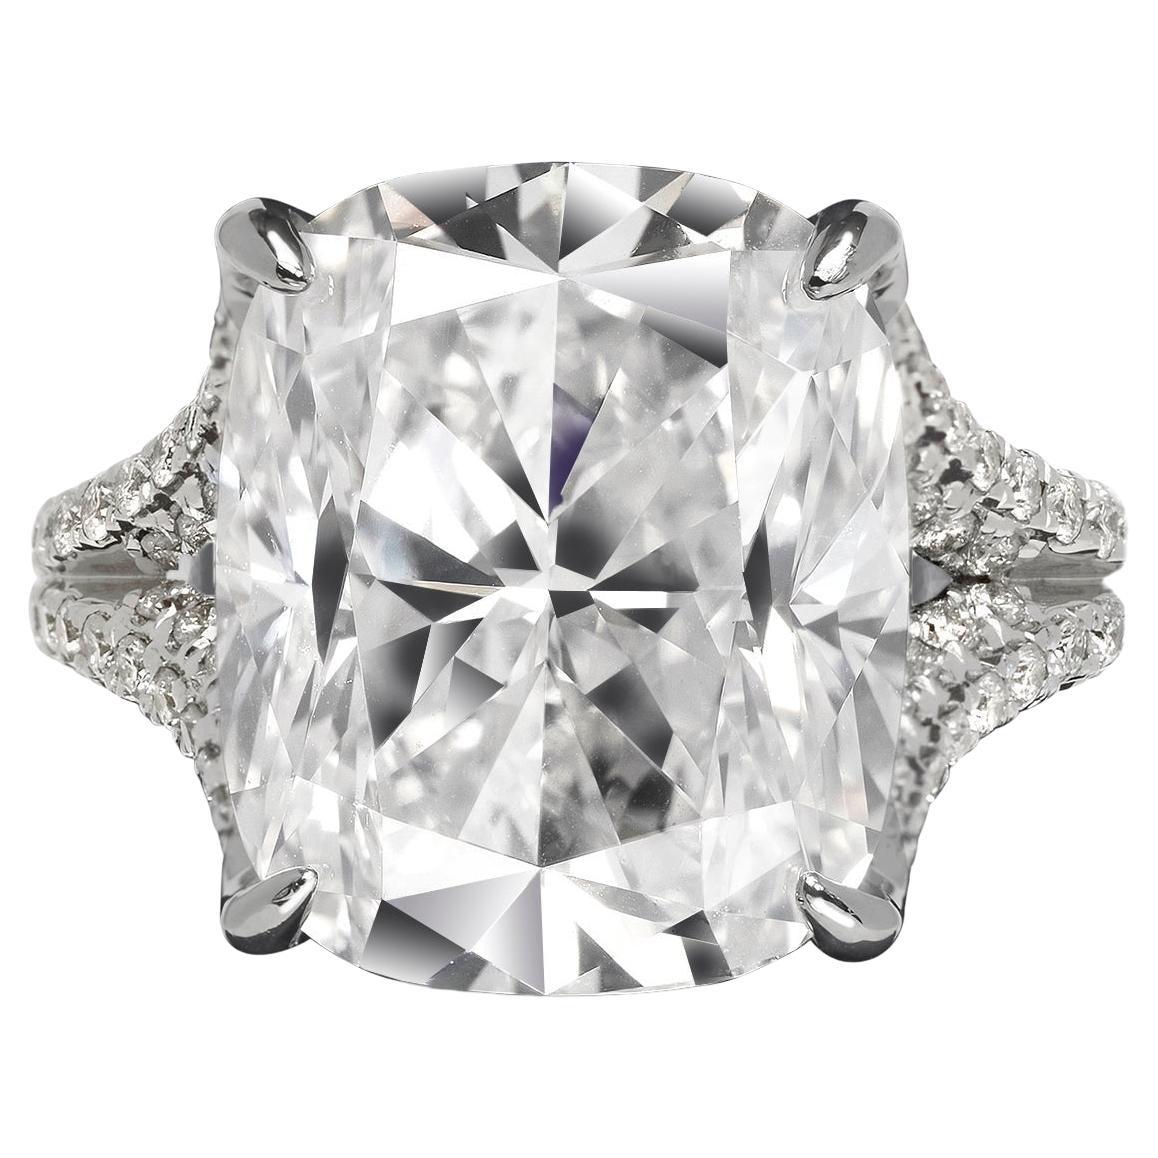 13 Carat Cushion Cut Diamond Engagement Ring GIA Certified E VVS1